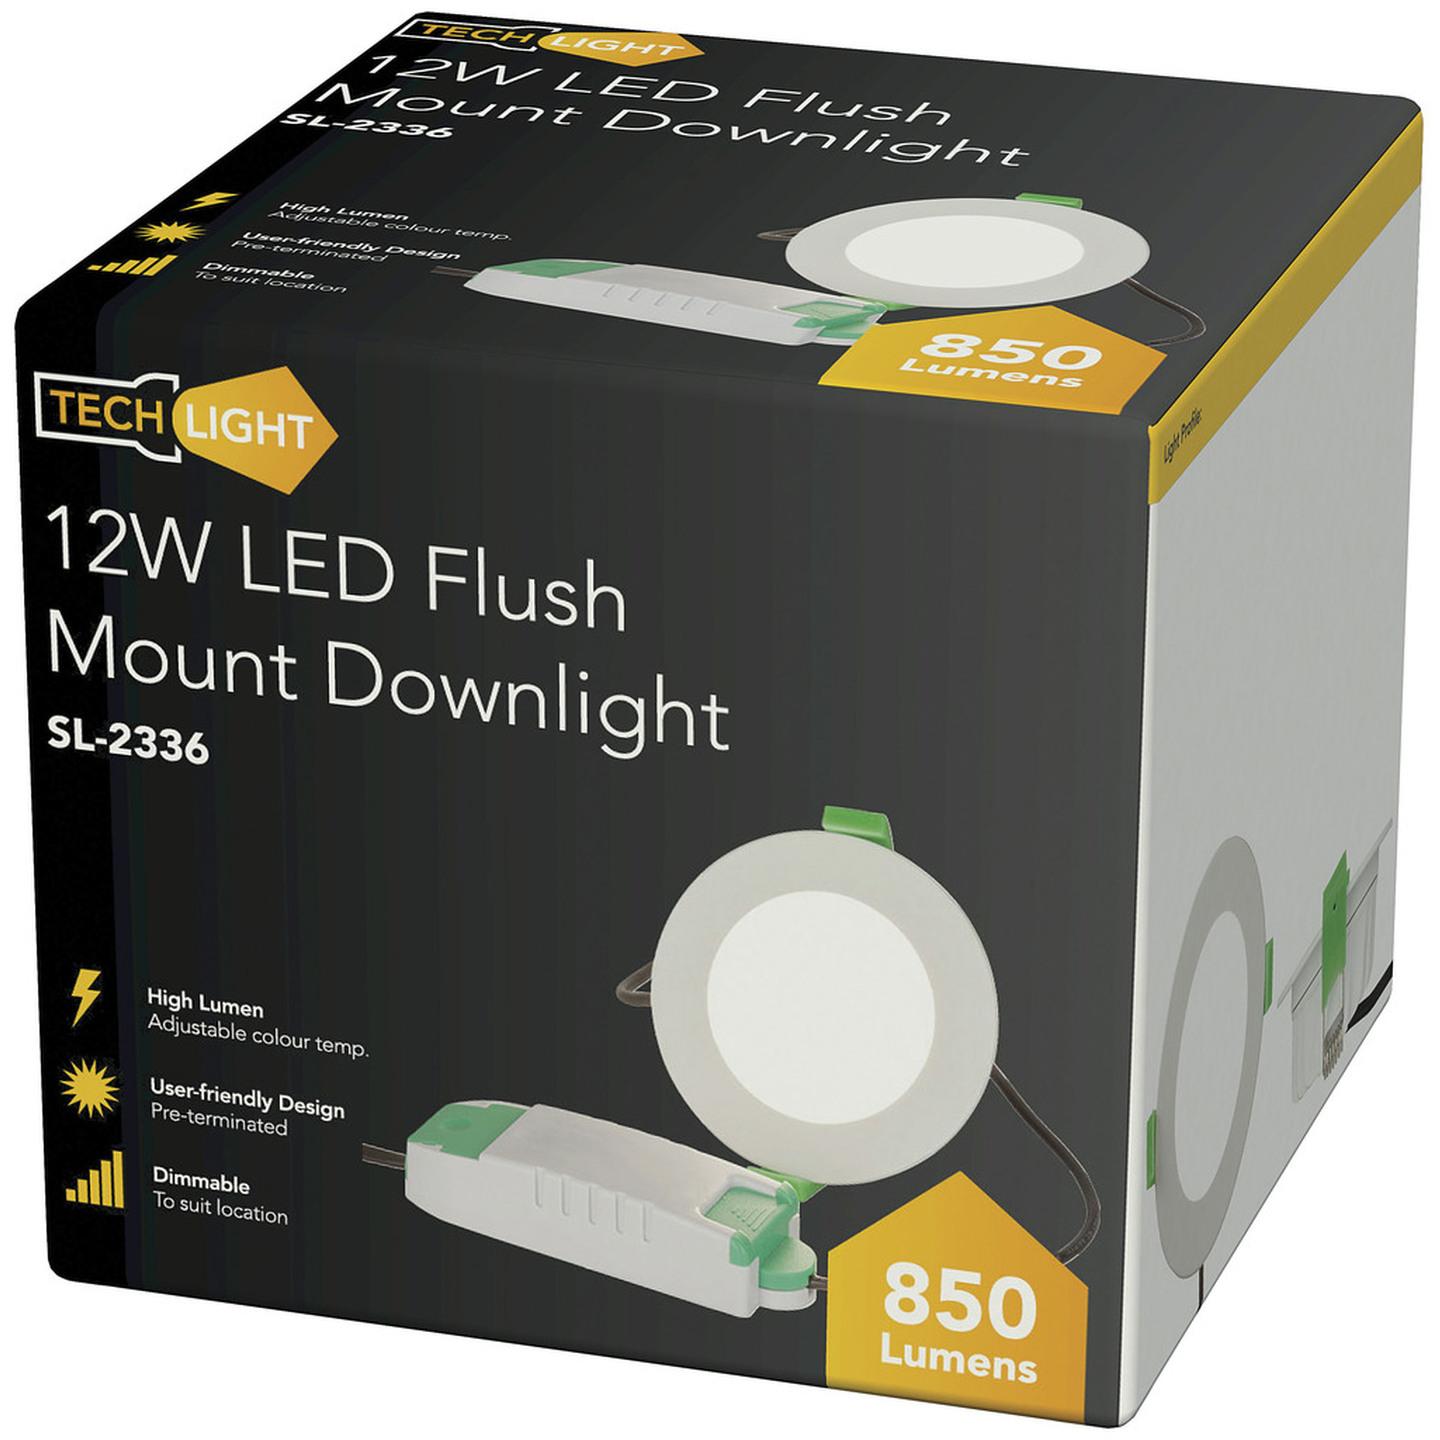 12W LED Flush Downlight with Colour Temp & Brightness Control